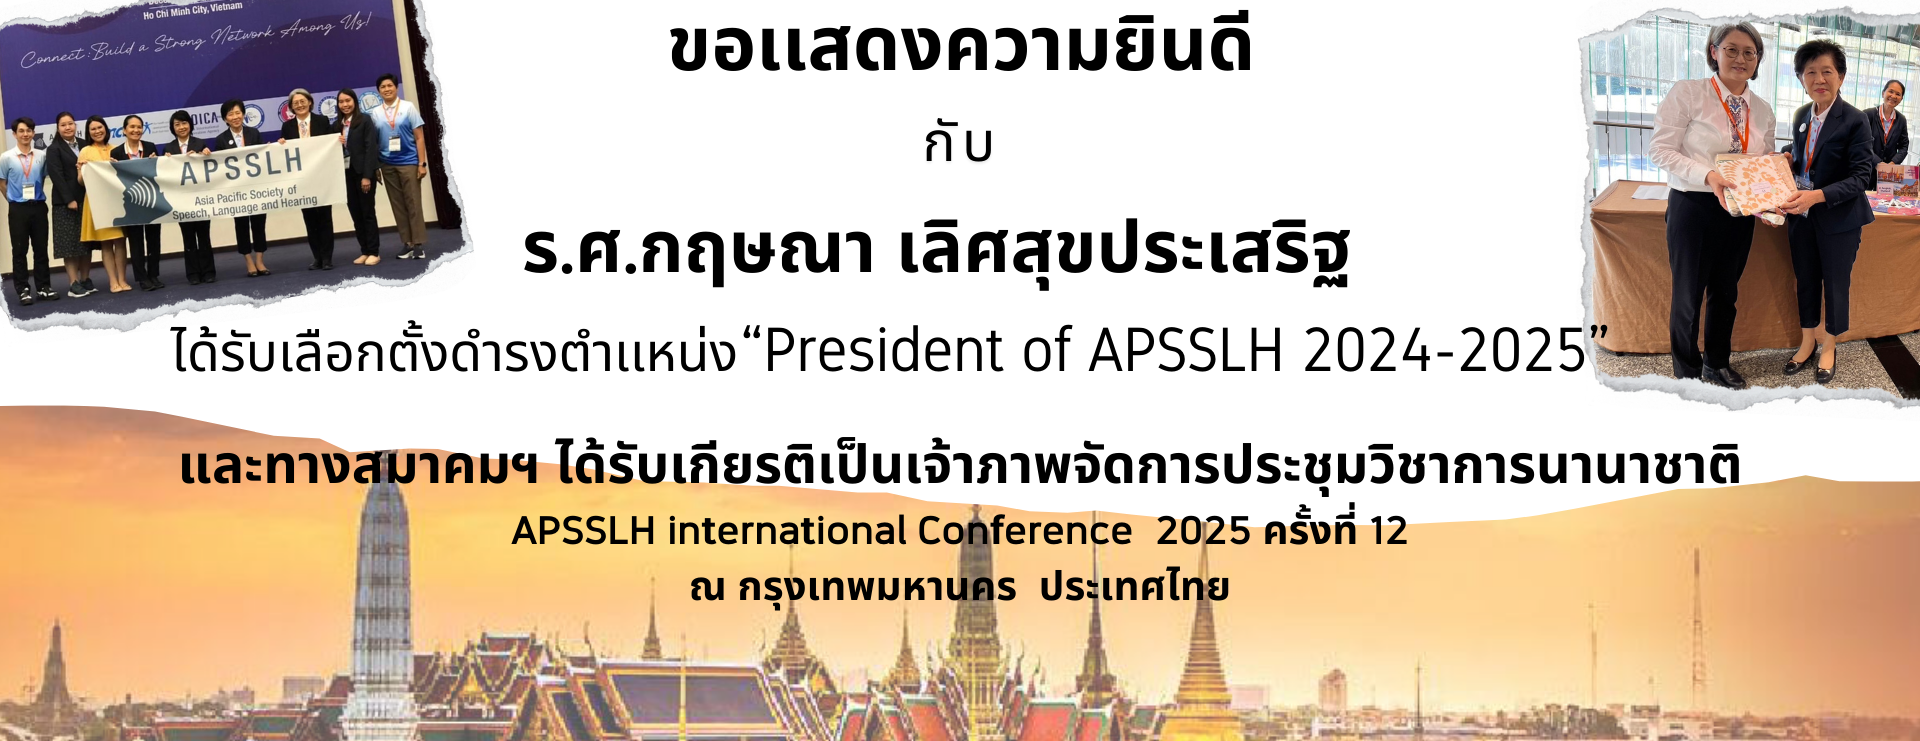 President of APSSLH 2025